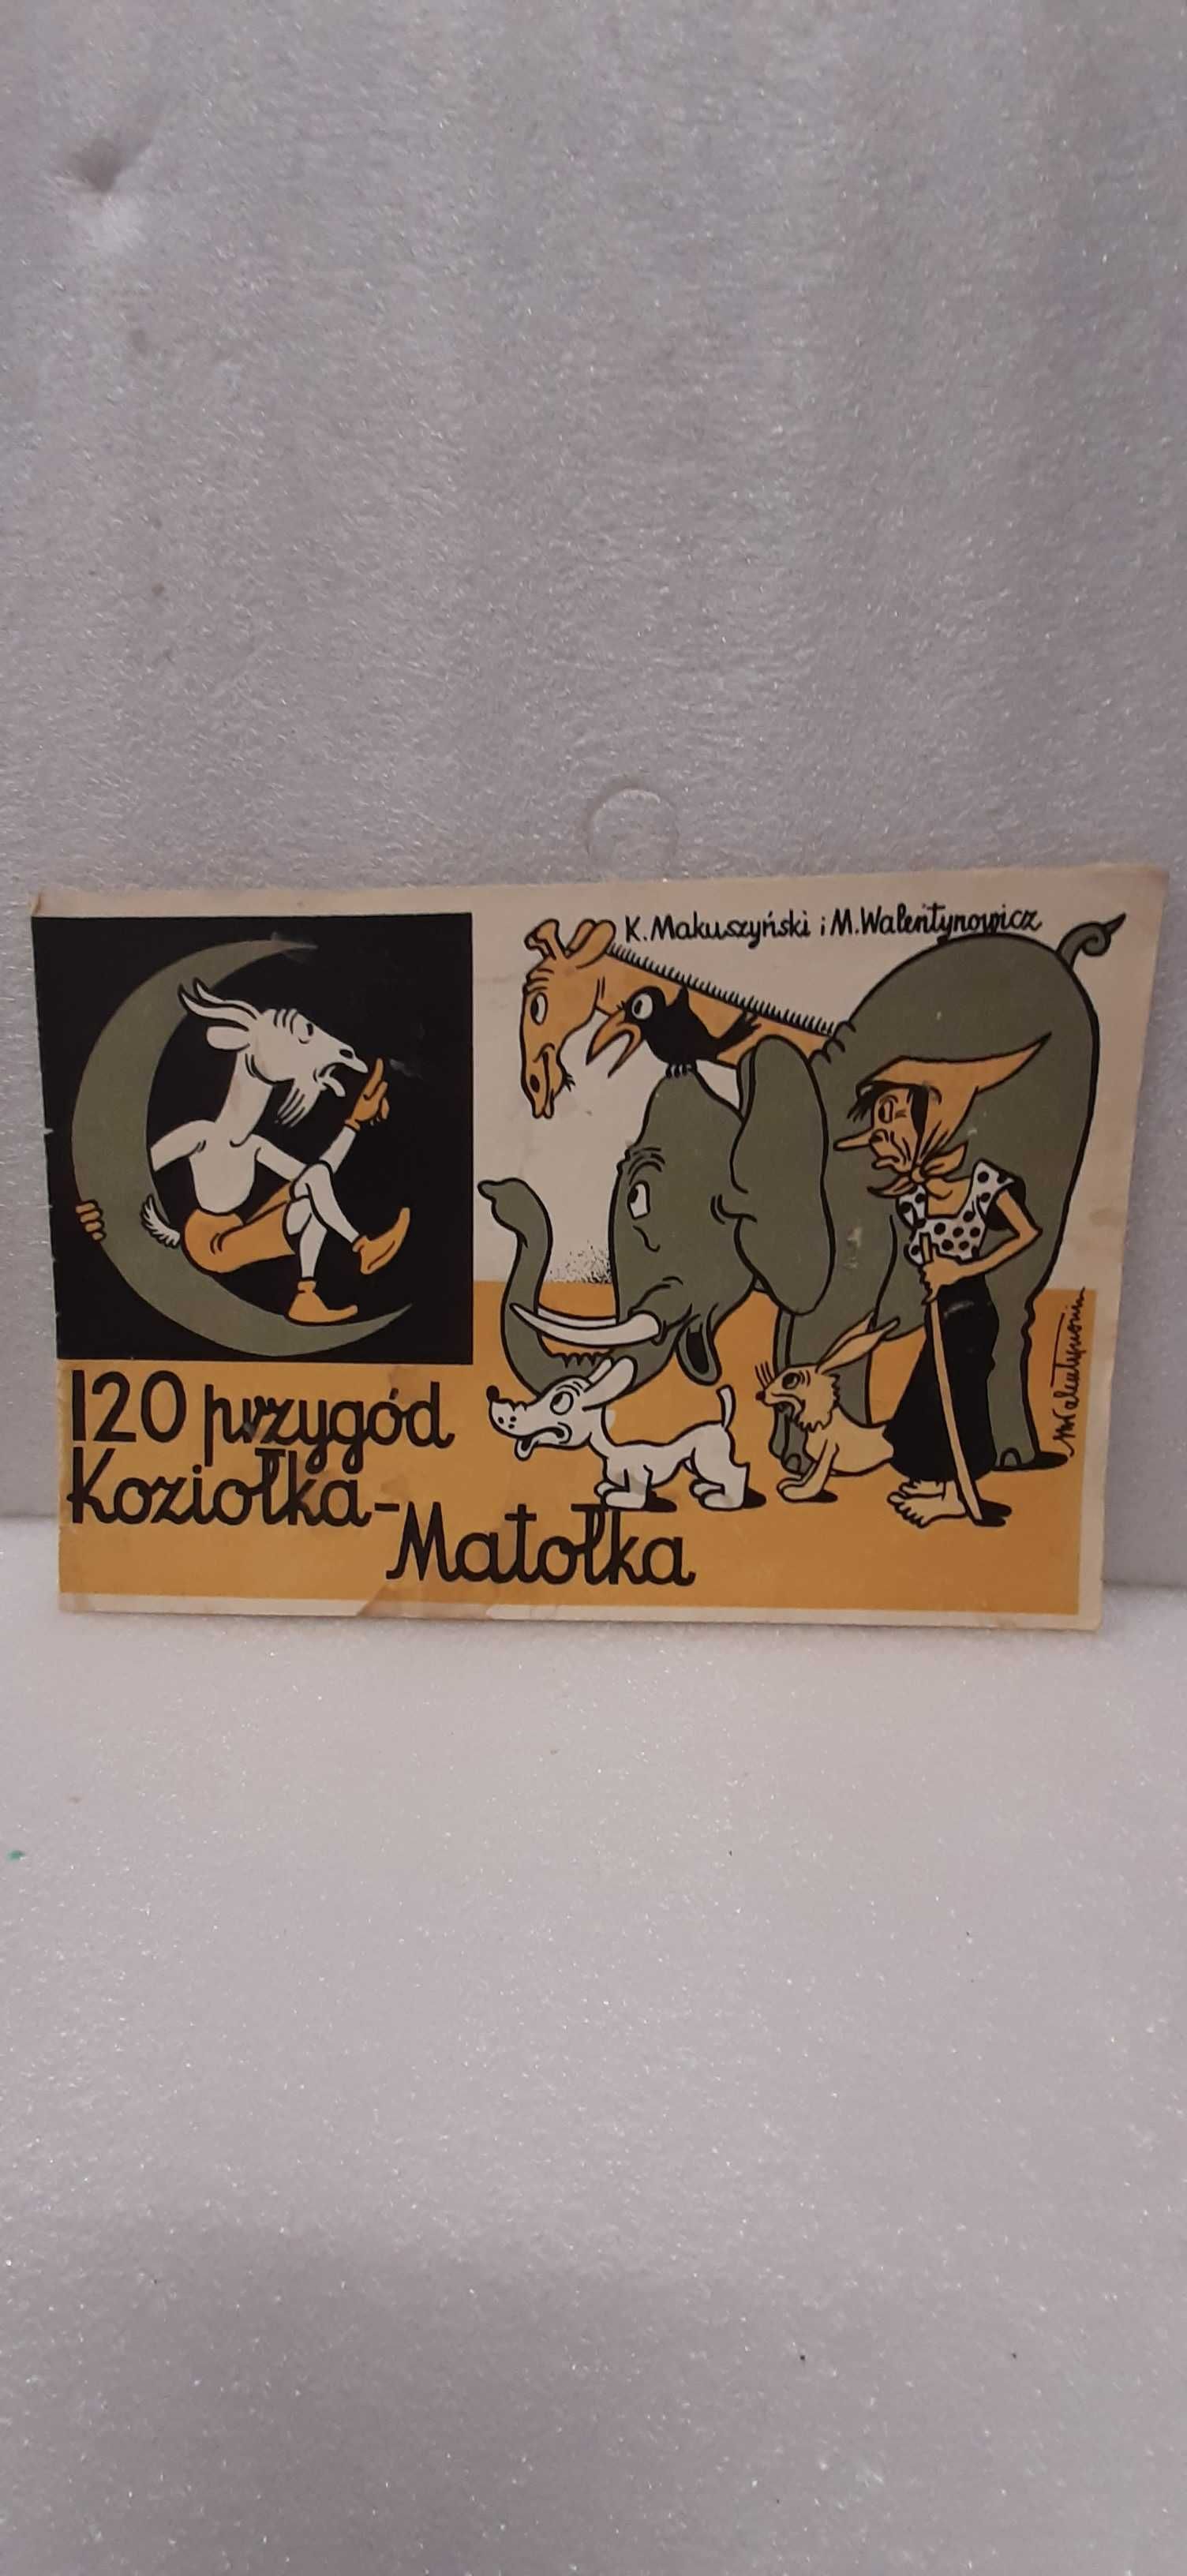 120 Przygód Koziołka Matołka. K. Makuszyński.